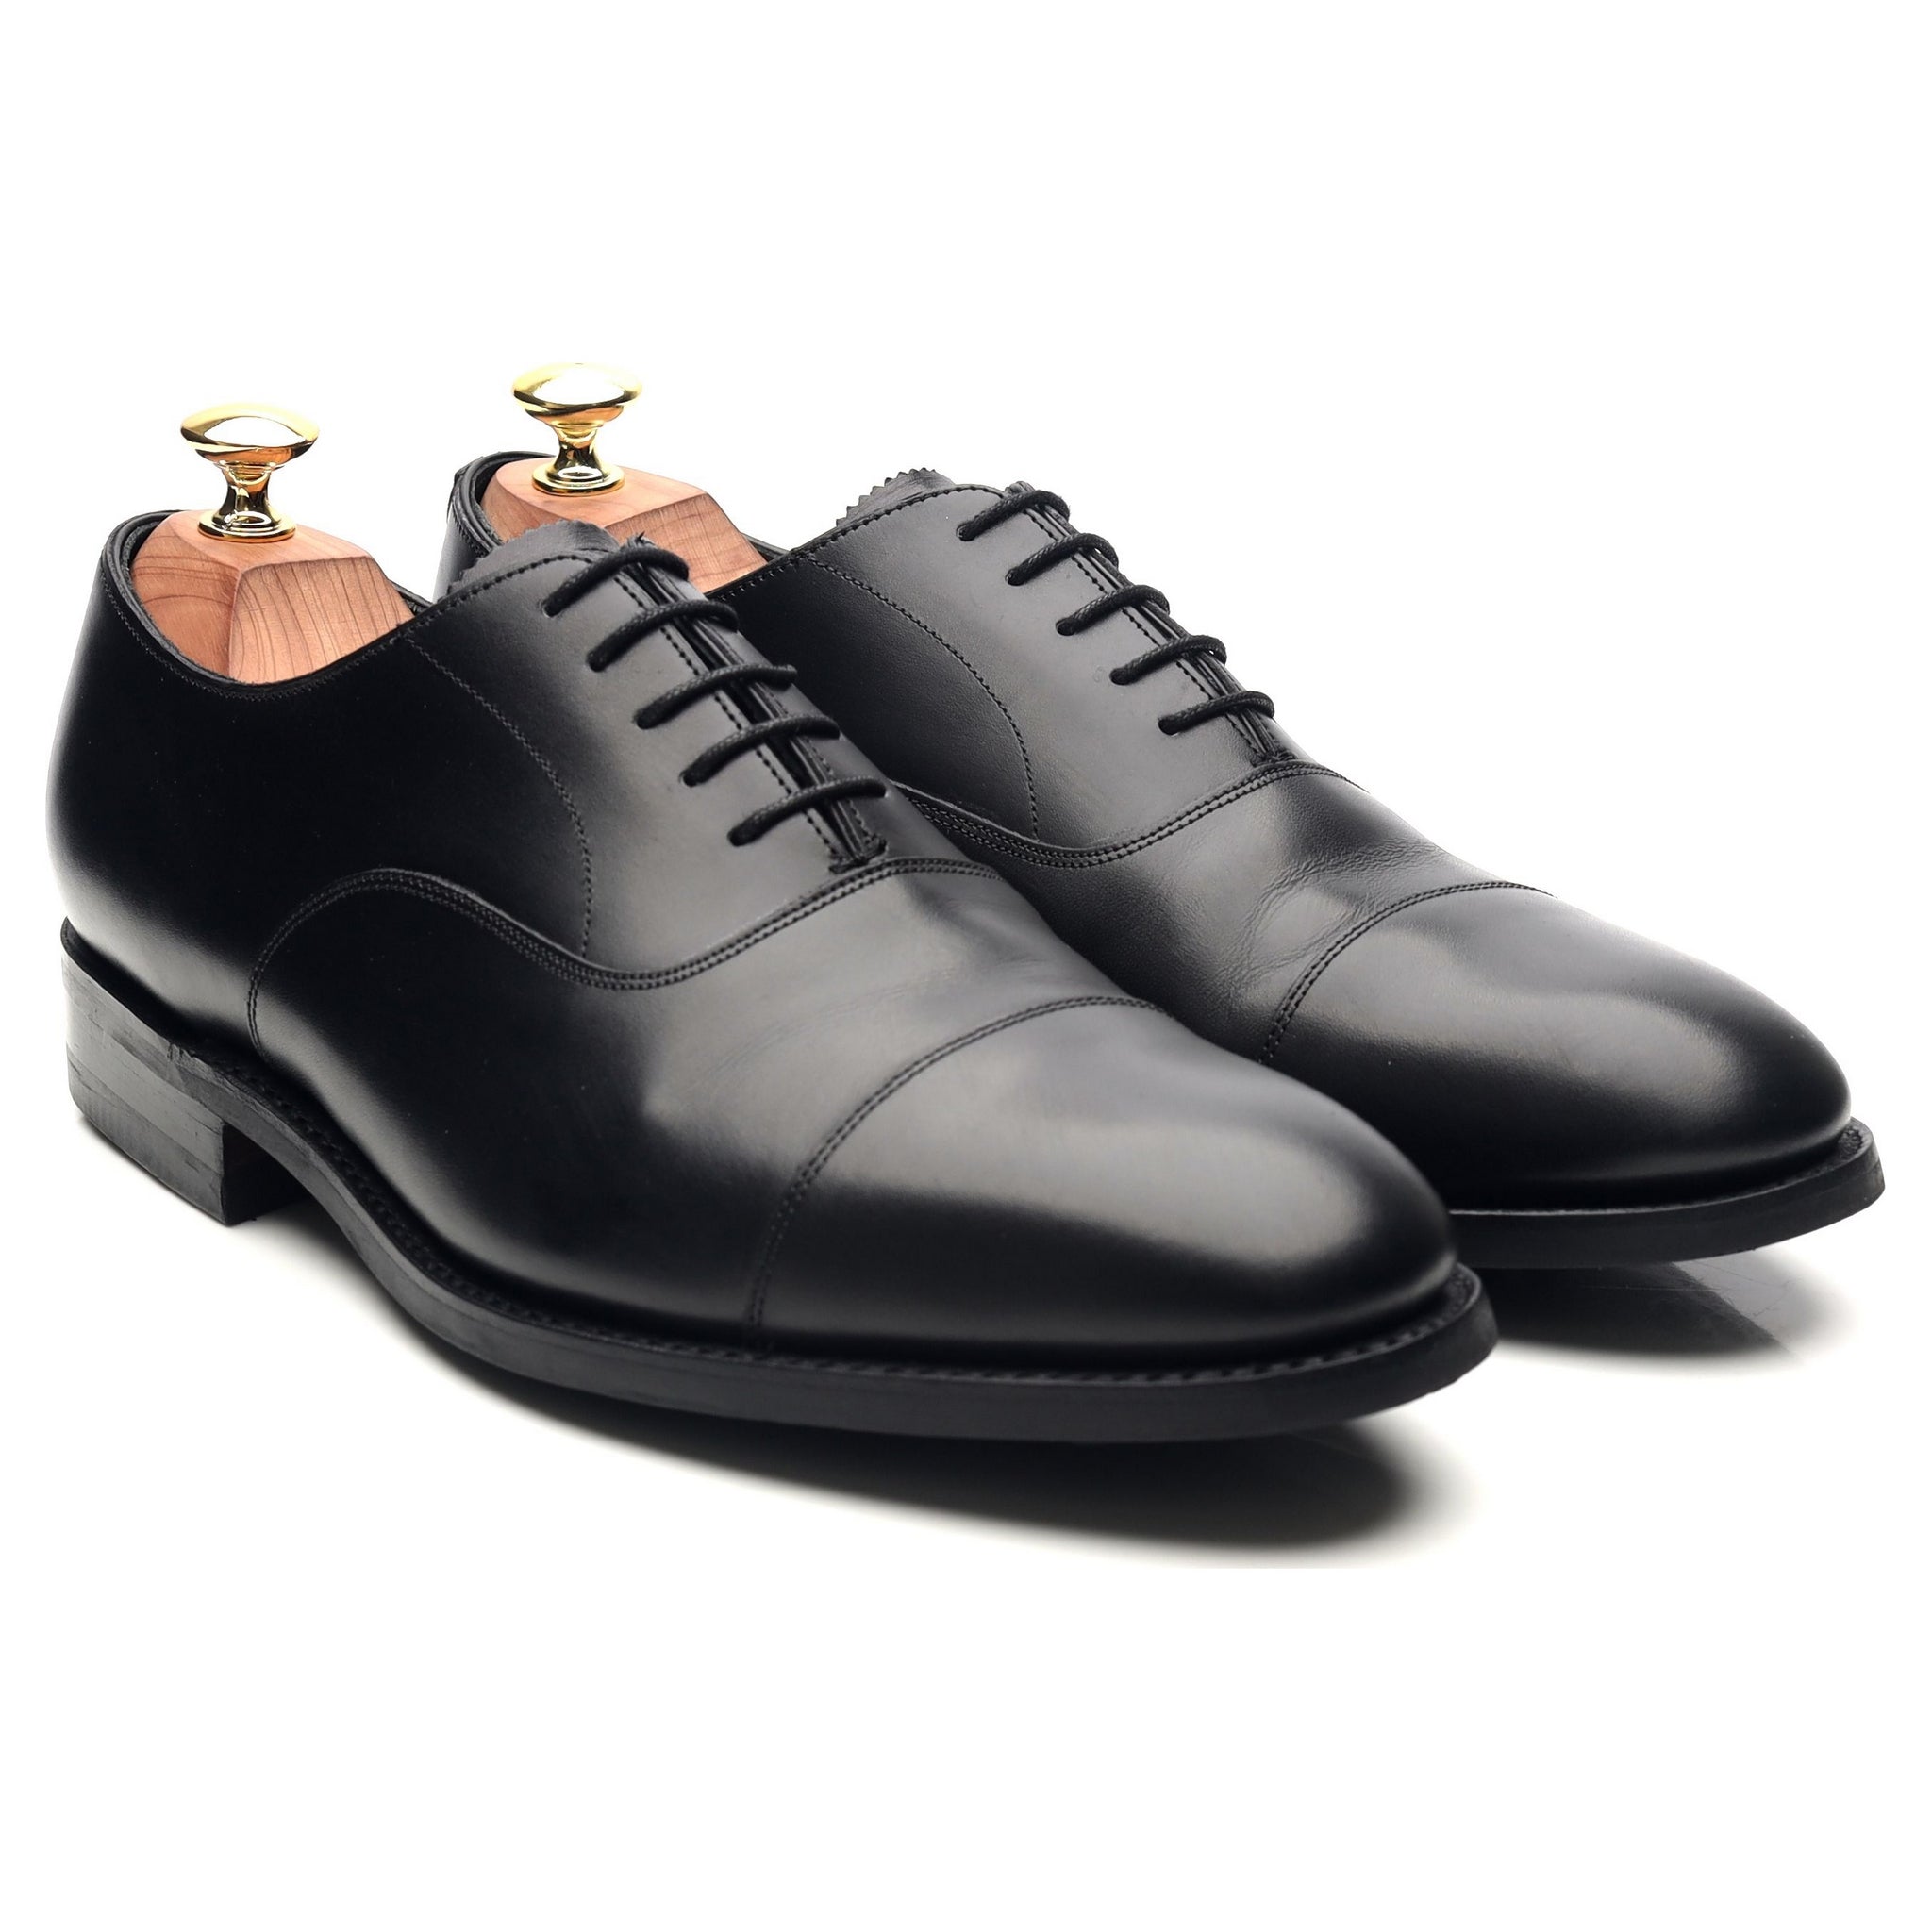 Herring 'Knightsbrige' Black Leather Oxford UK 8.5 F - Abbot's Shoes